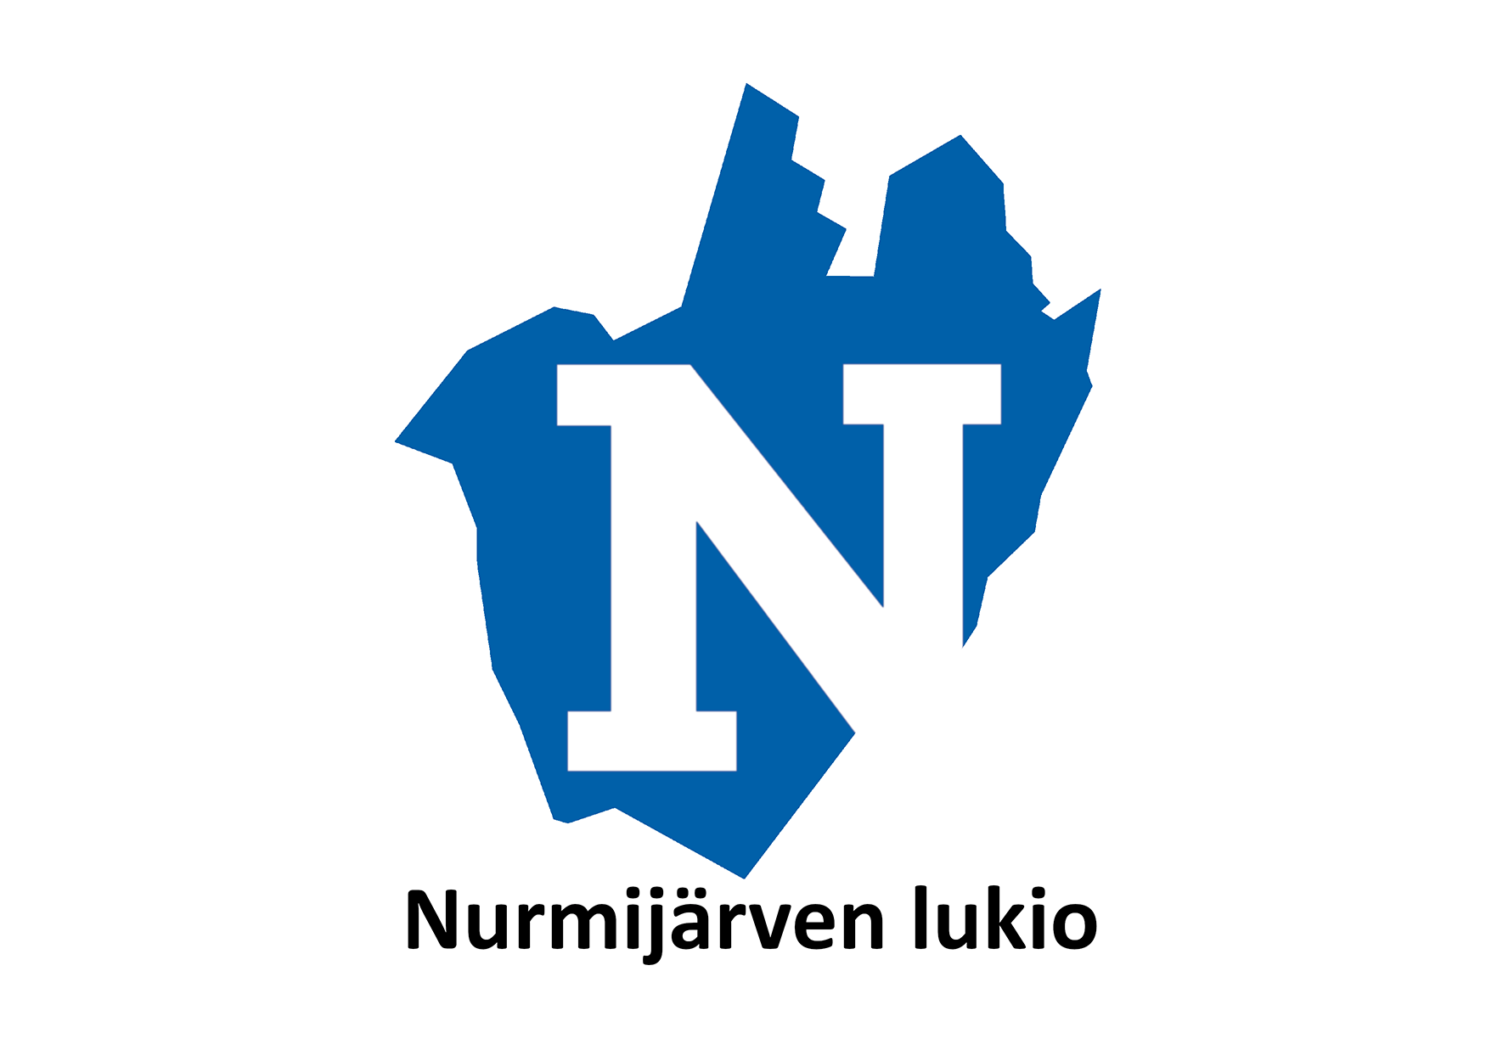 Nurmijärven lukion logo